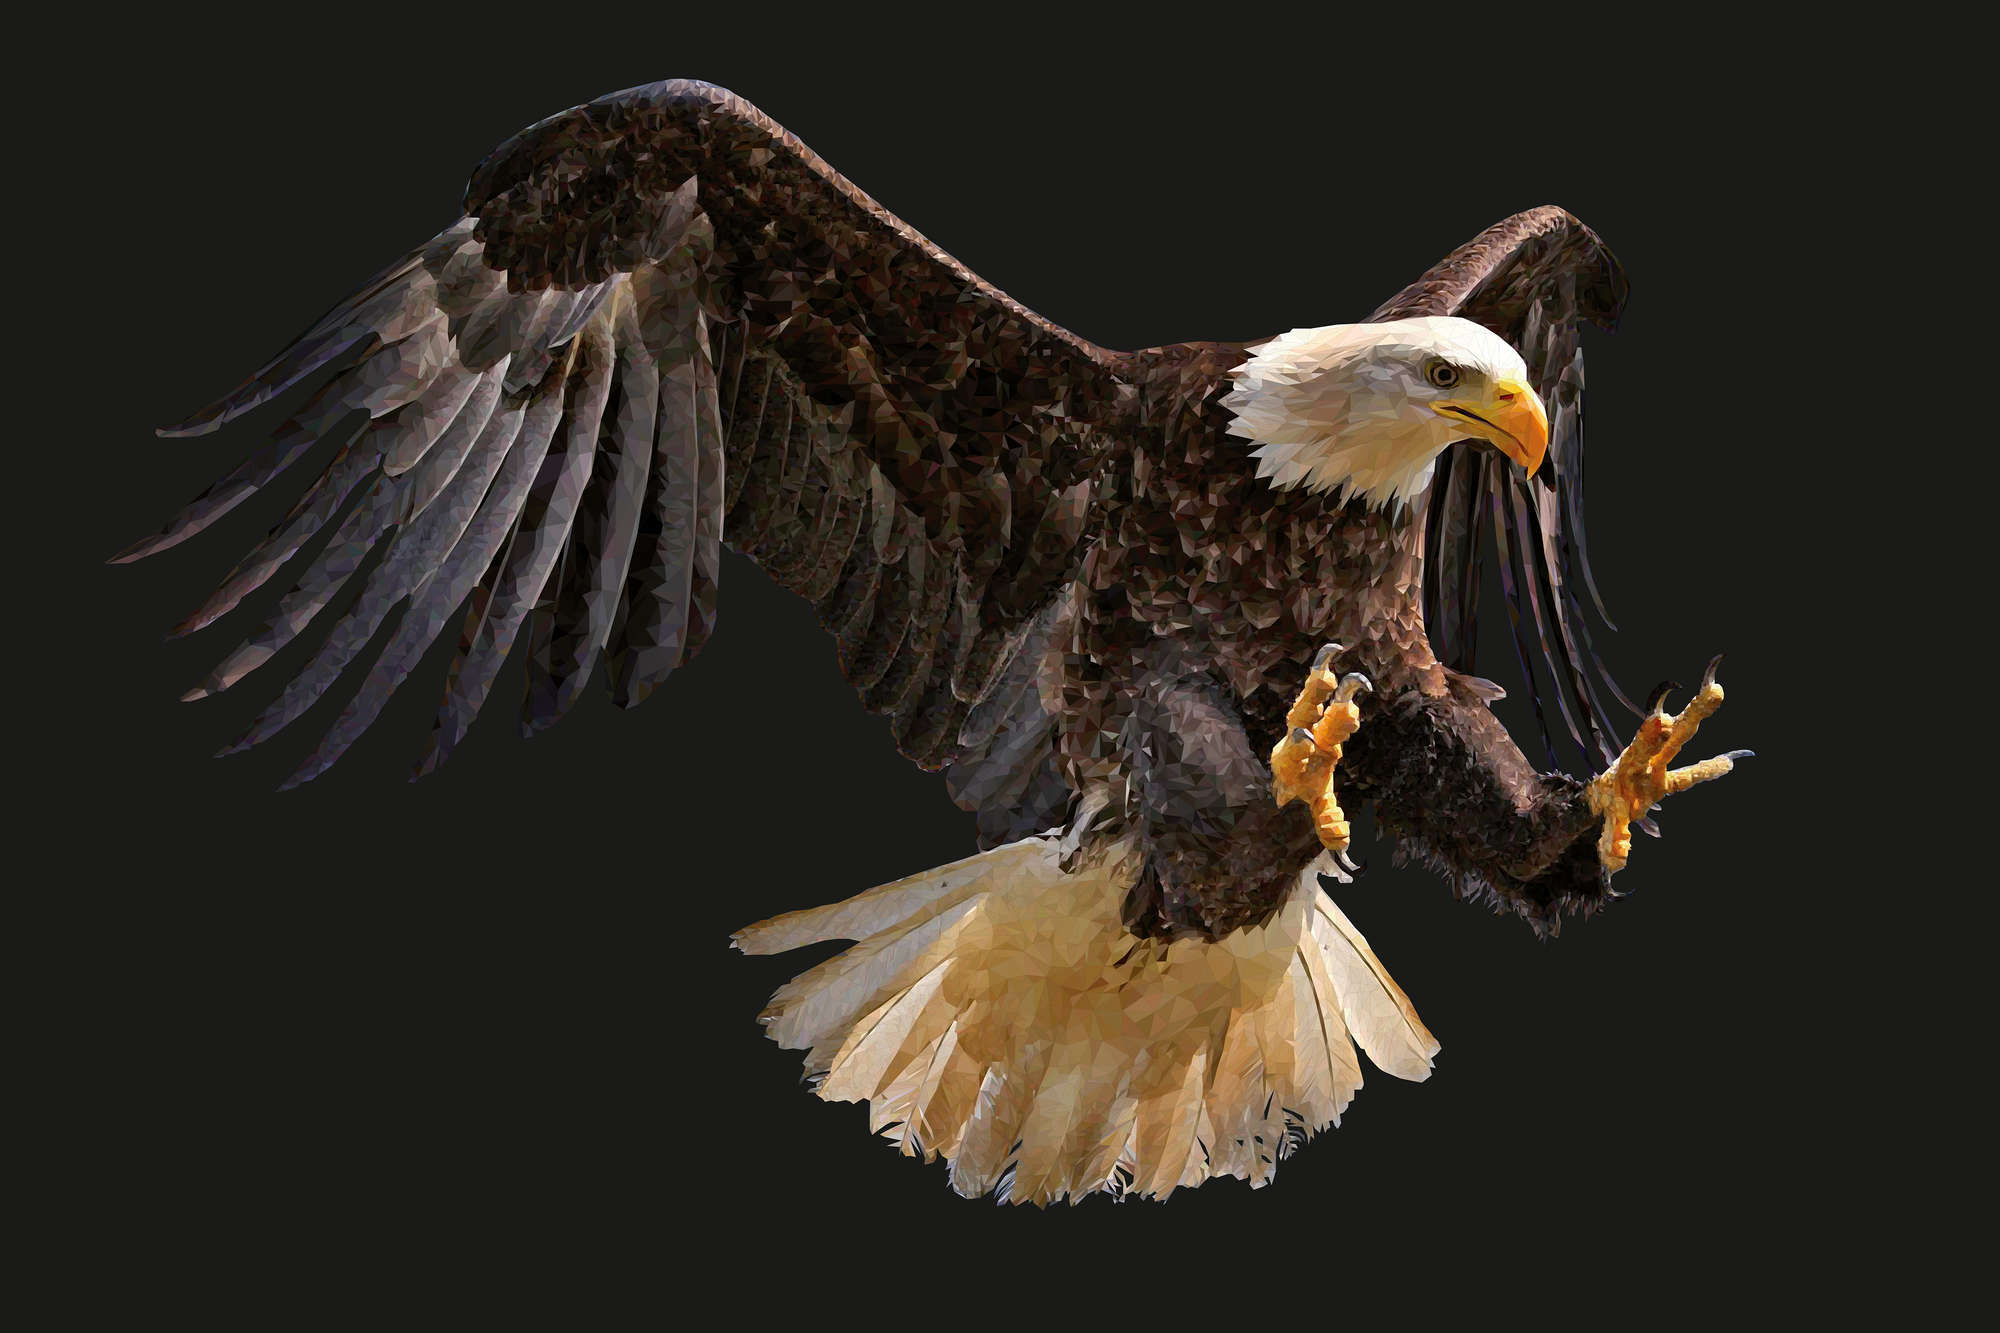             Papel pintado gráfico con motivo de águila sobre tejido no tejido texturizado
        